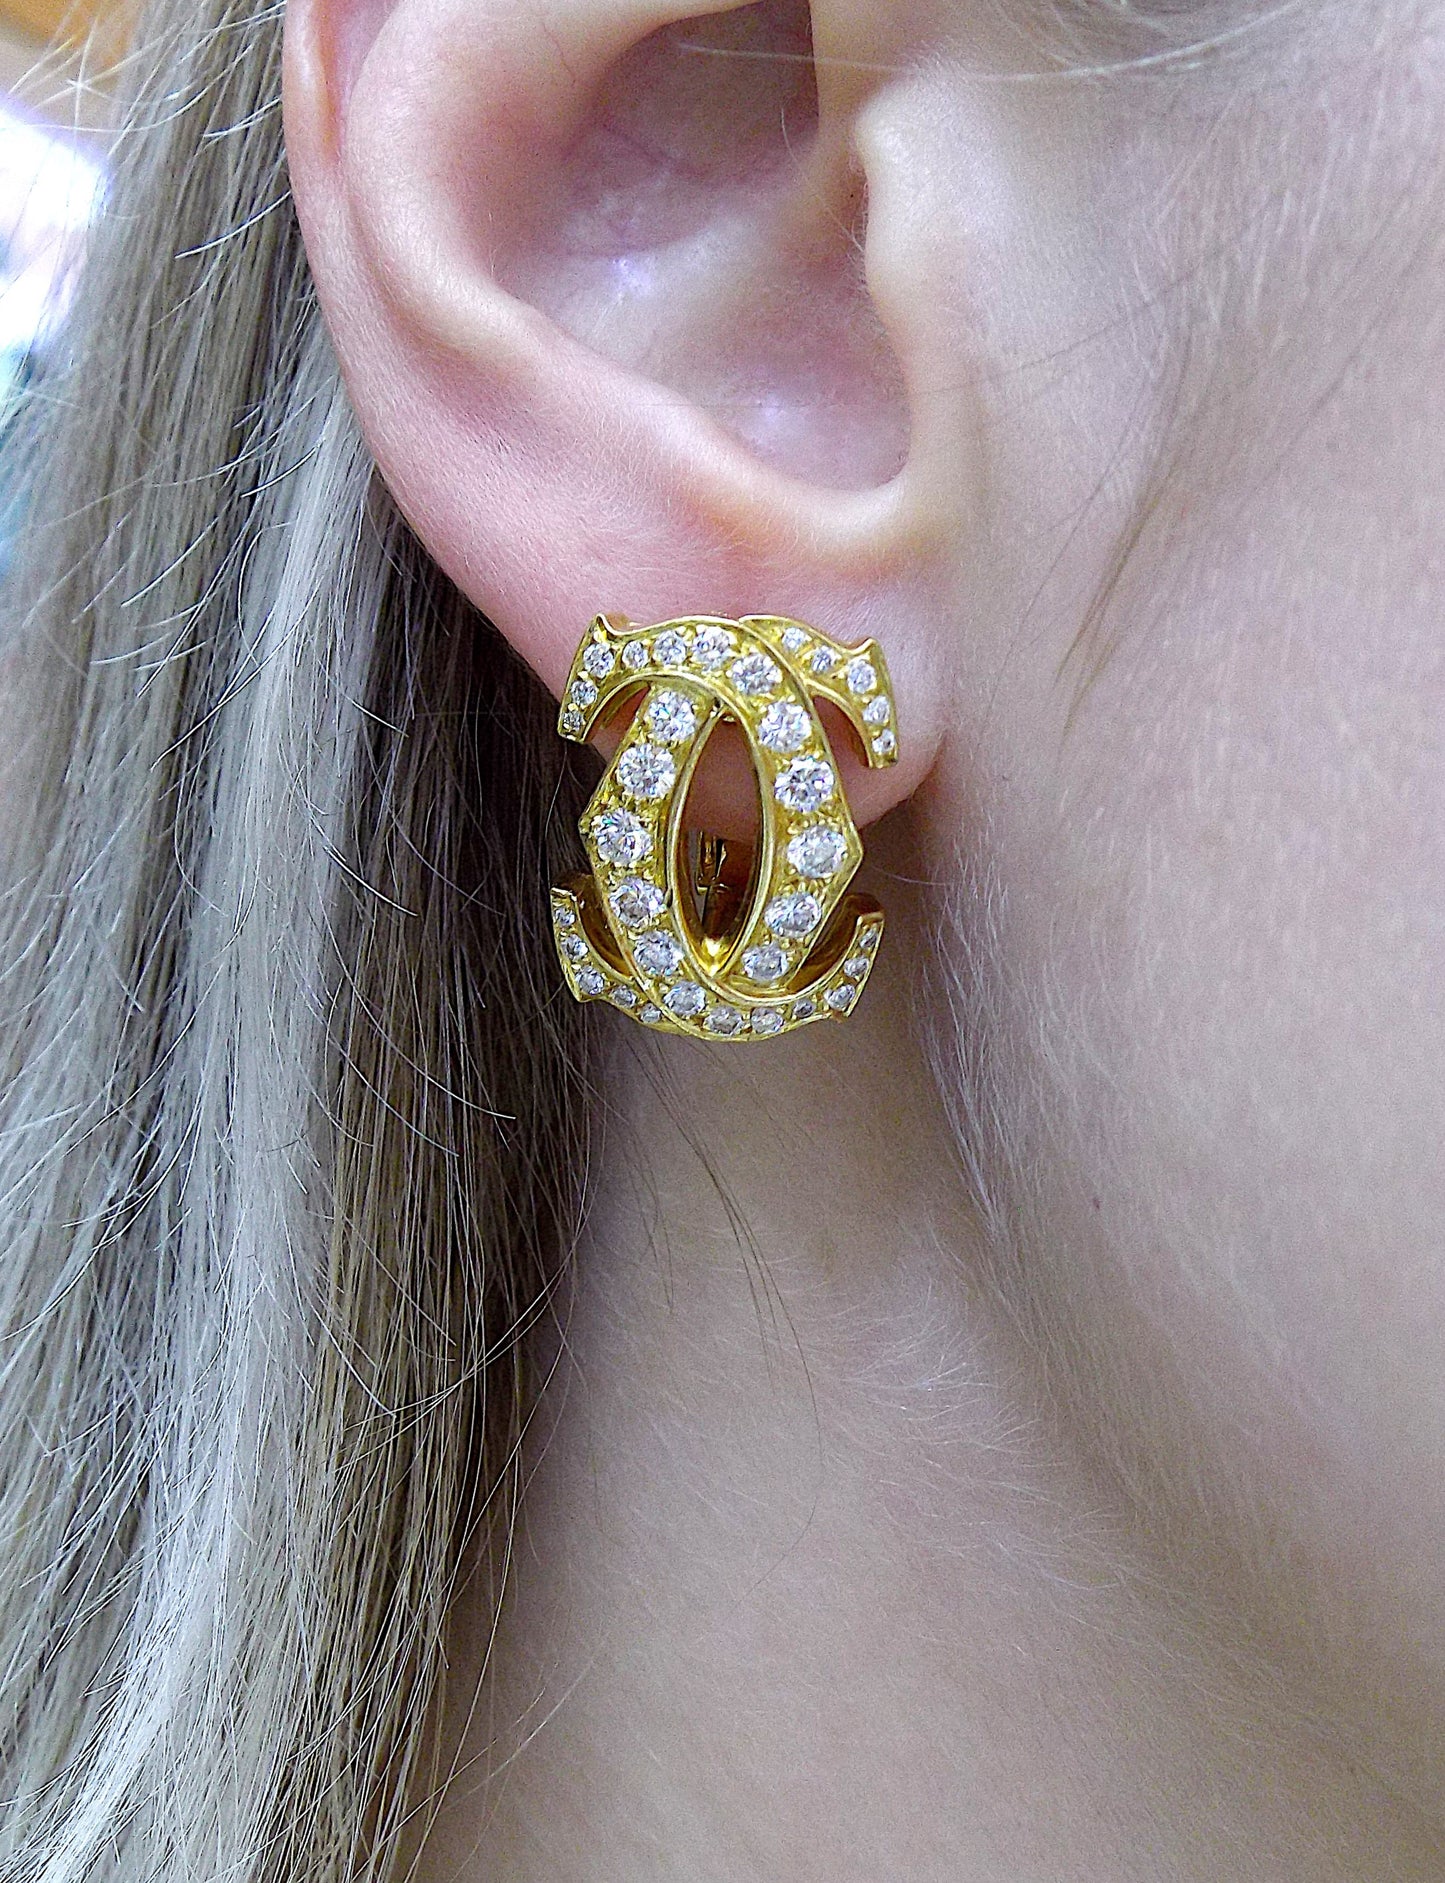 Cartier Double C 18K Yellow Gold Diamond Earrings